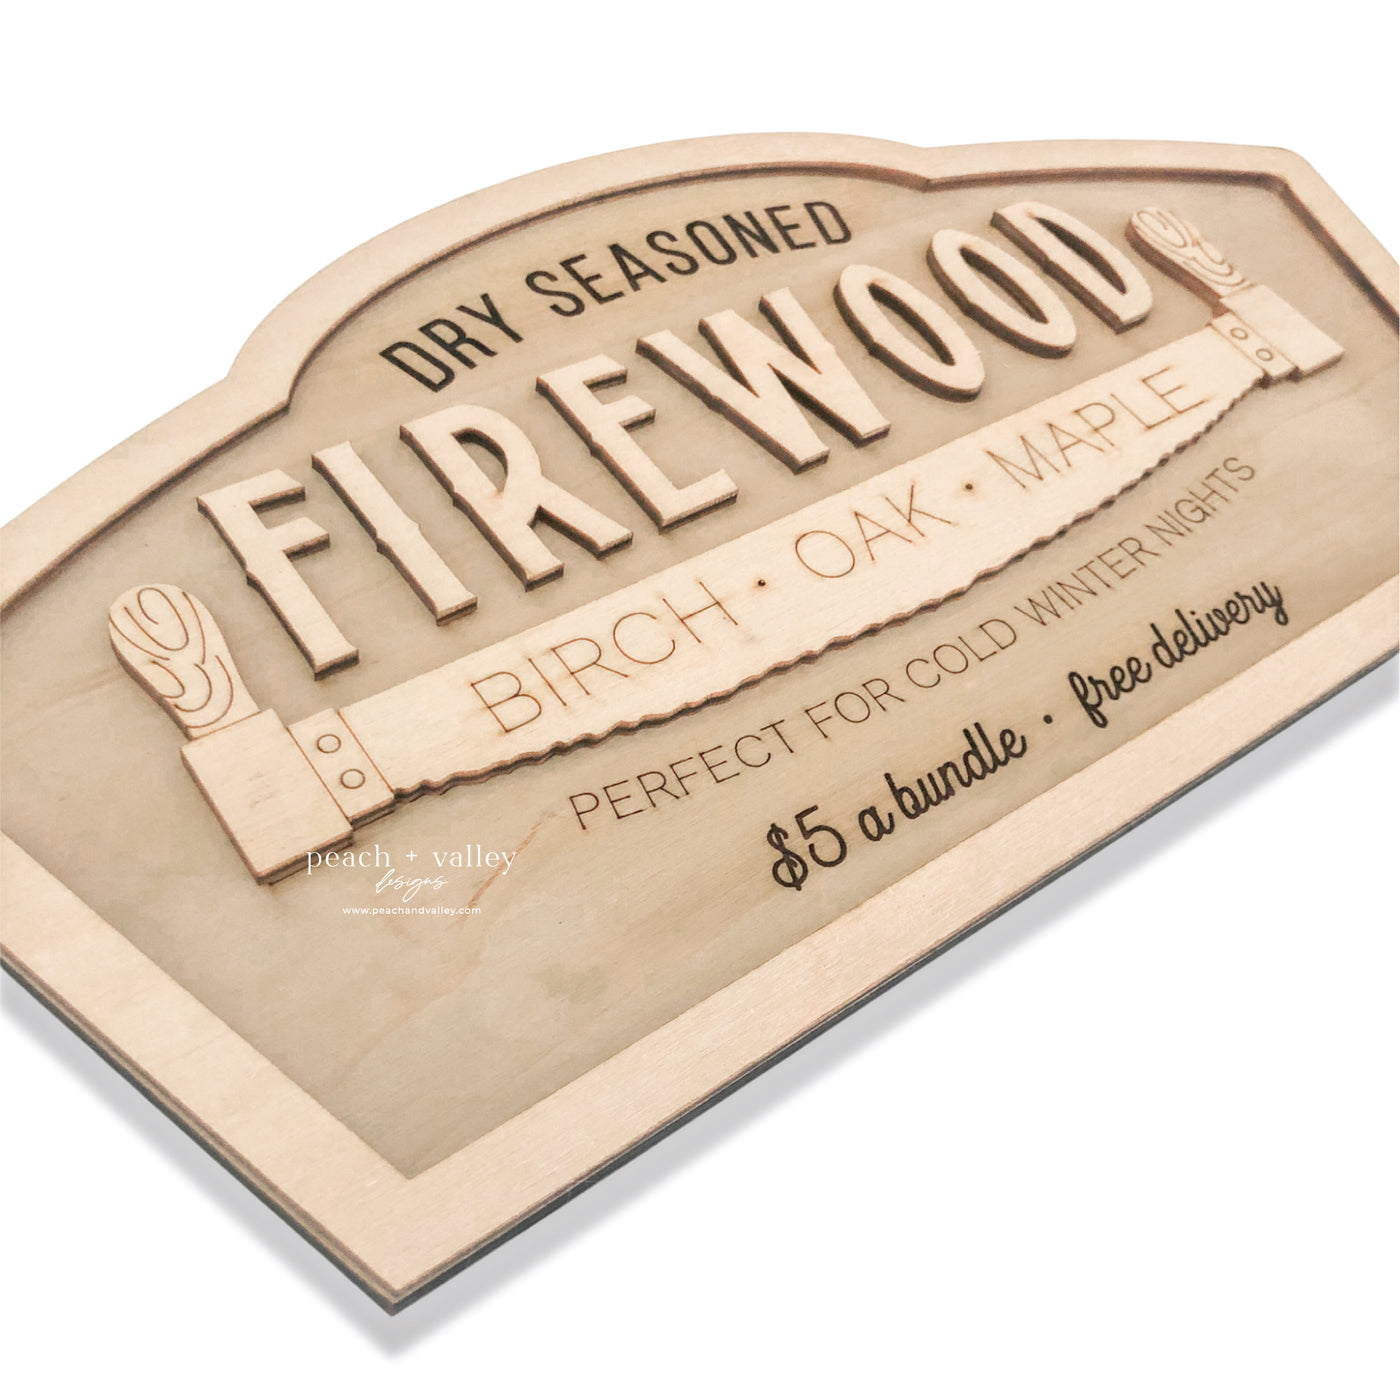 Firewood Sign Blank